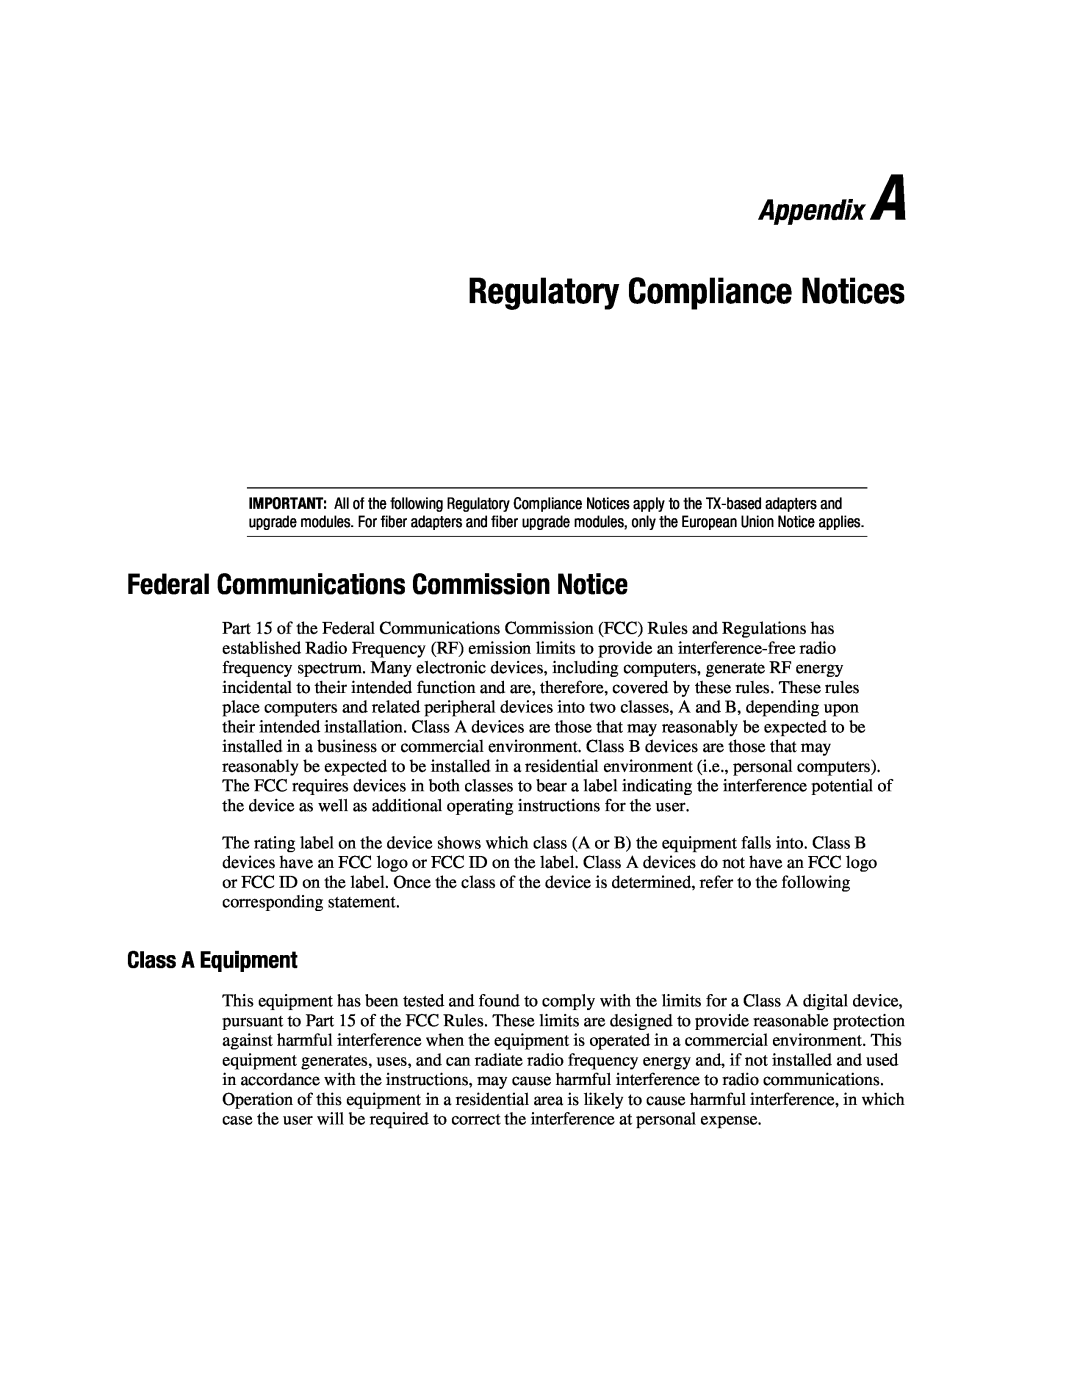 Compaq 3134 manual Regulatory Compliance Notices, Appendix A, Federal Communications Commission Notice, Class A Equipment 